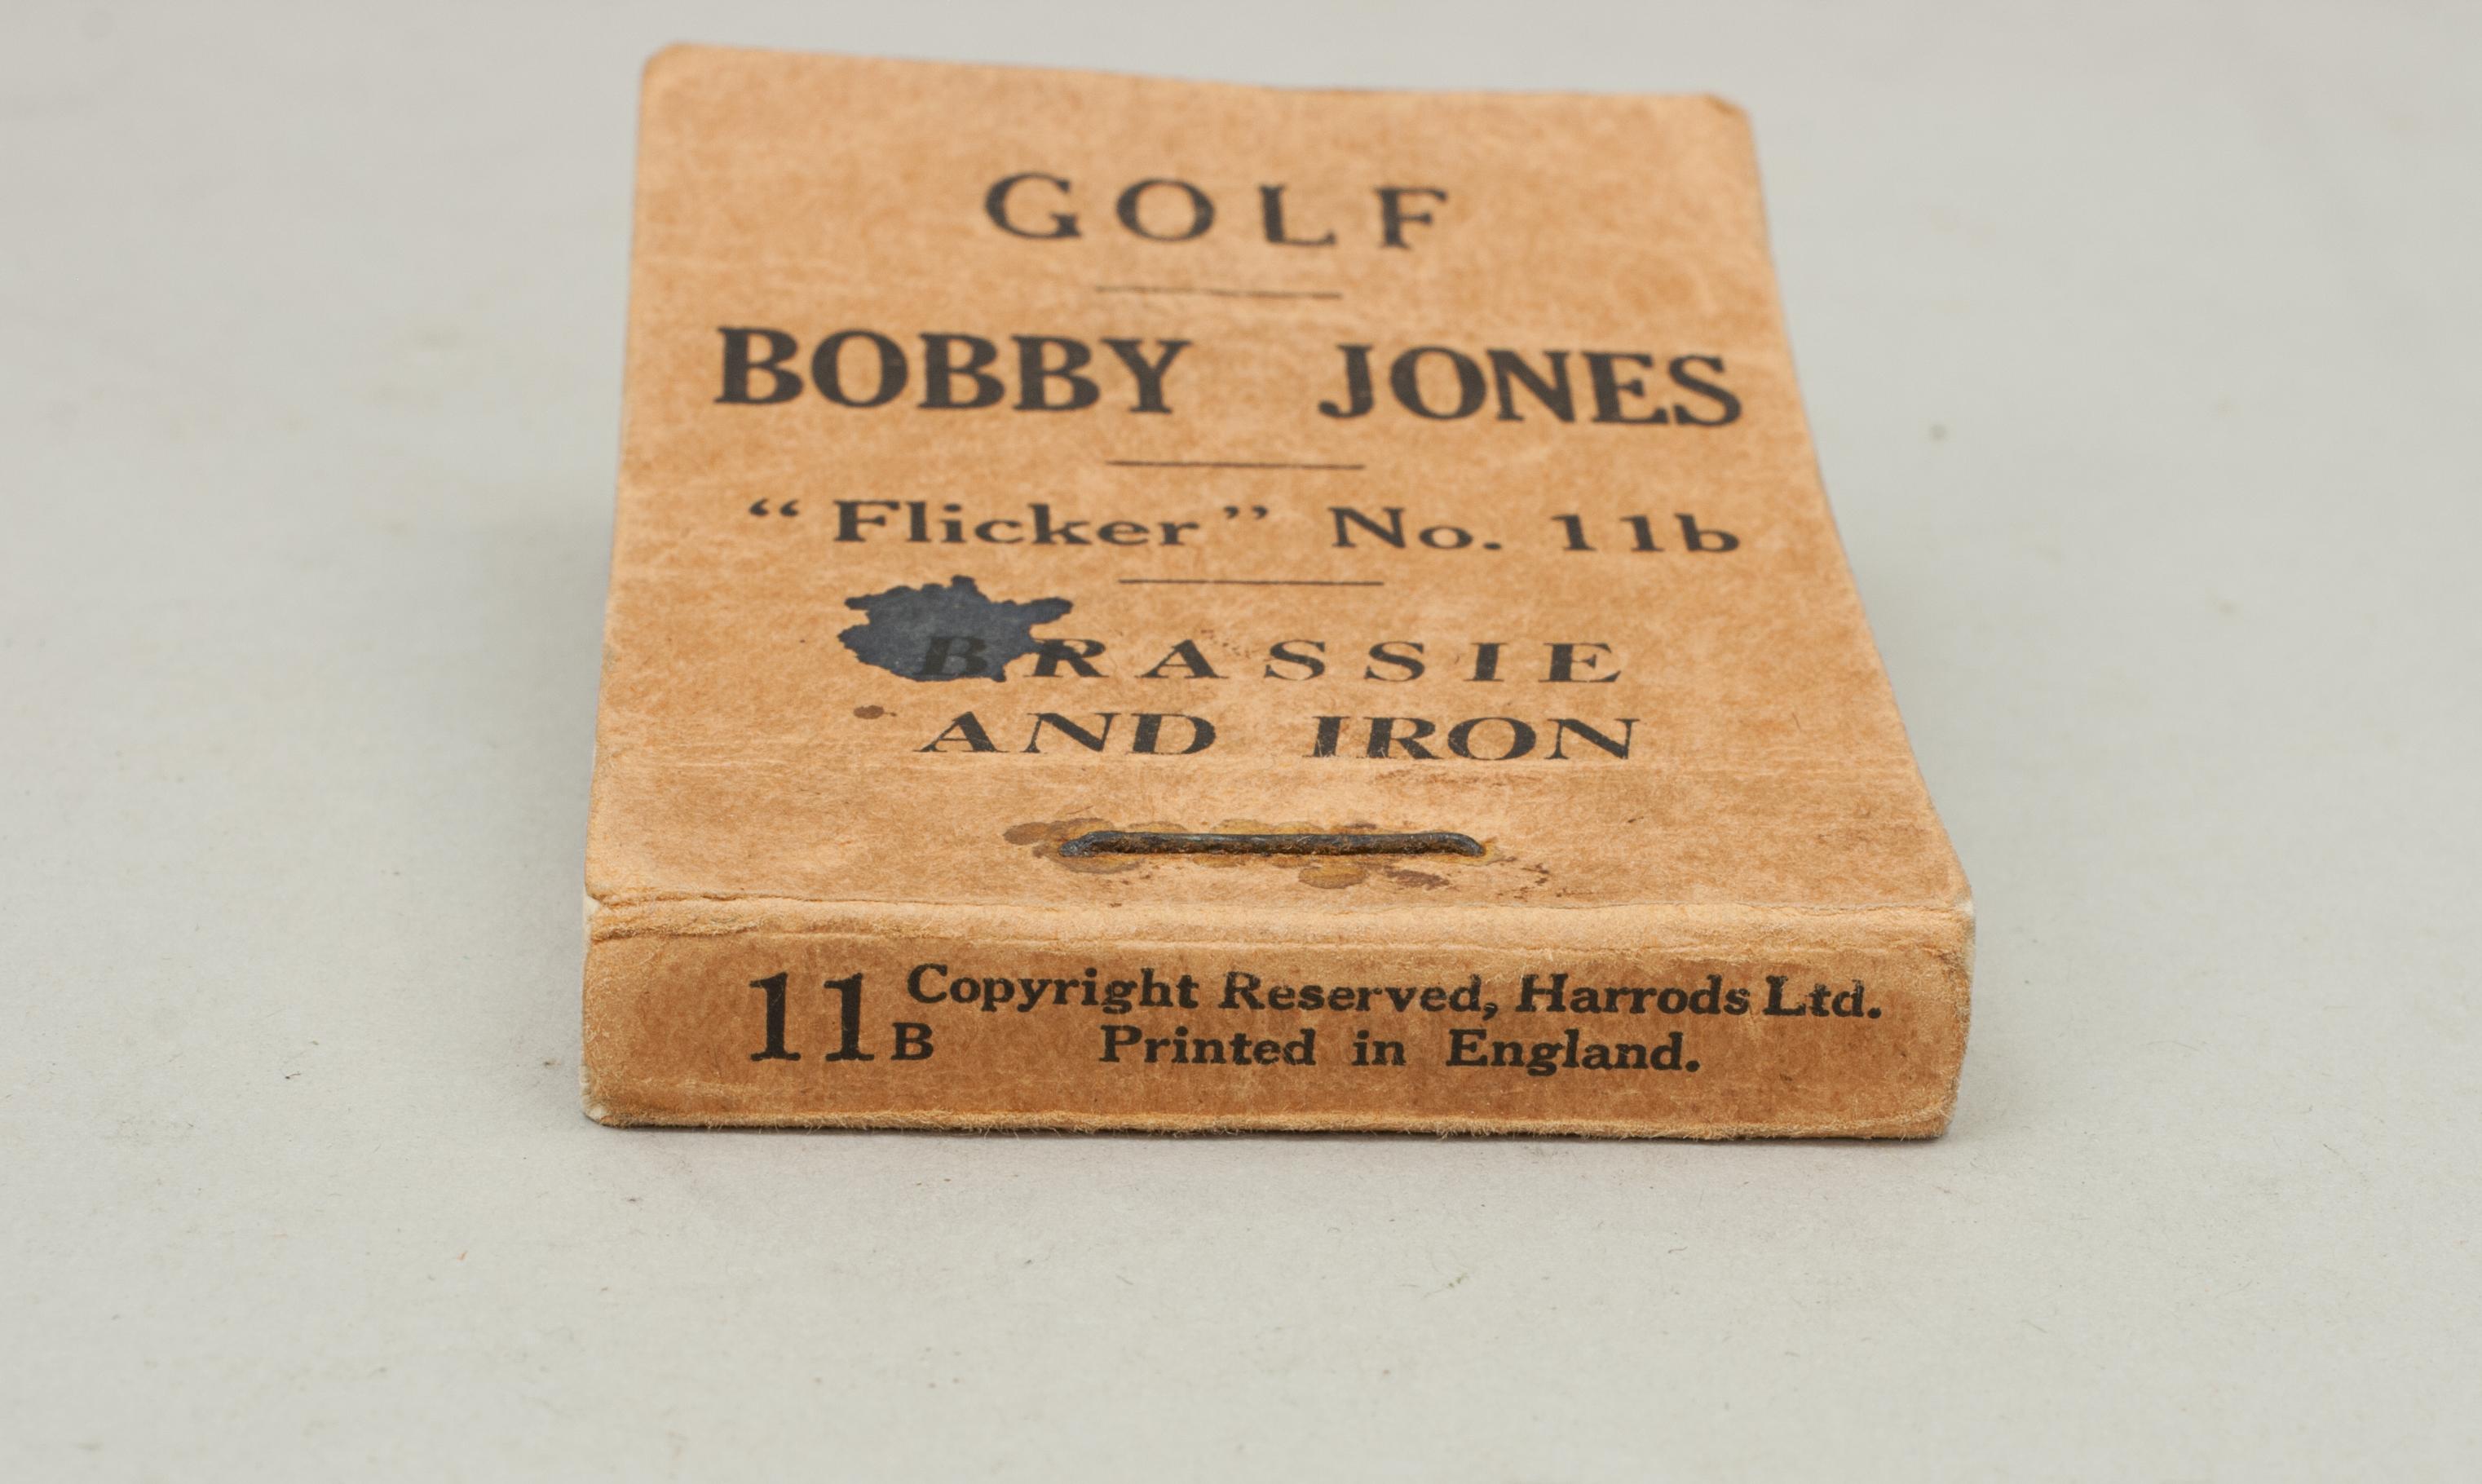 Sporting Art Vintage Golf Flicker Book, Bobby Jones, Brassie and Iron